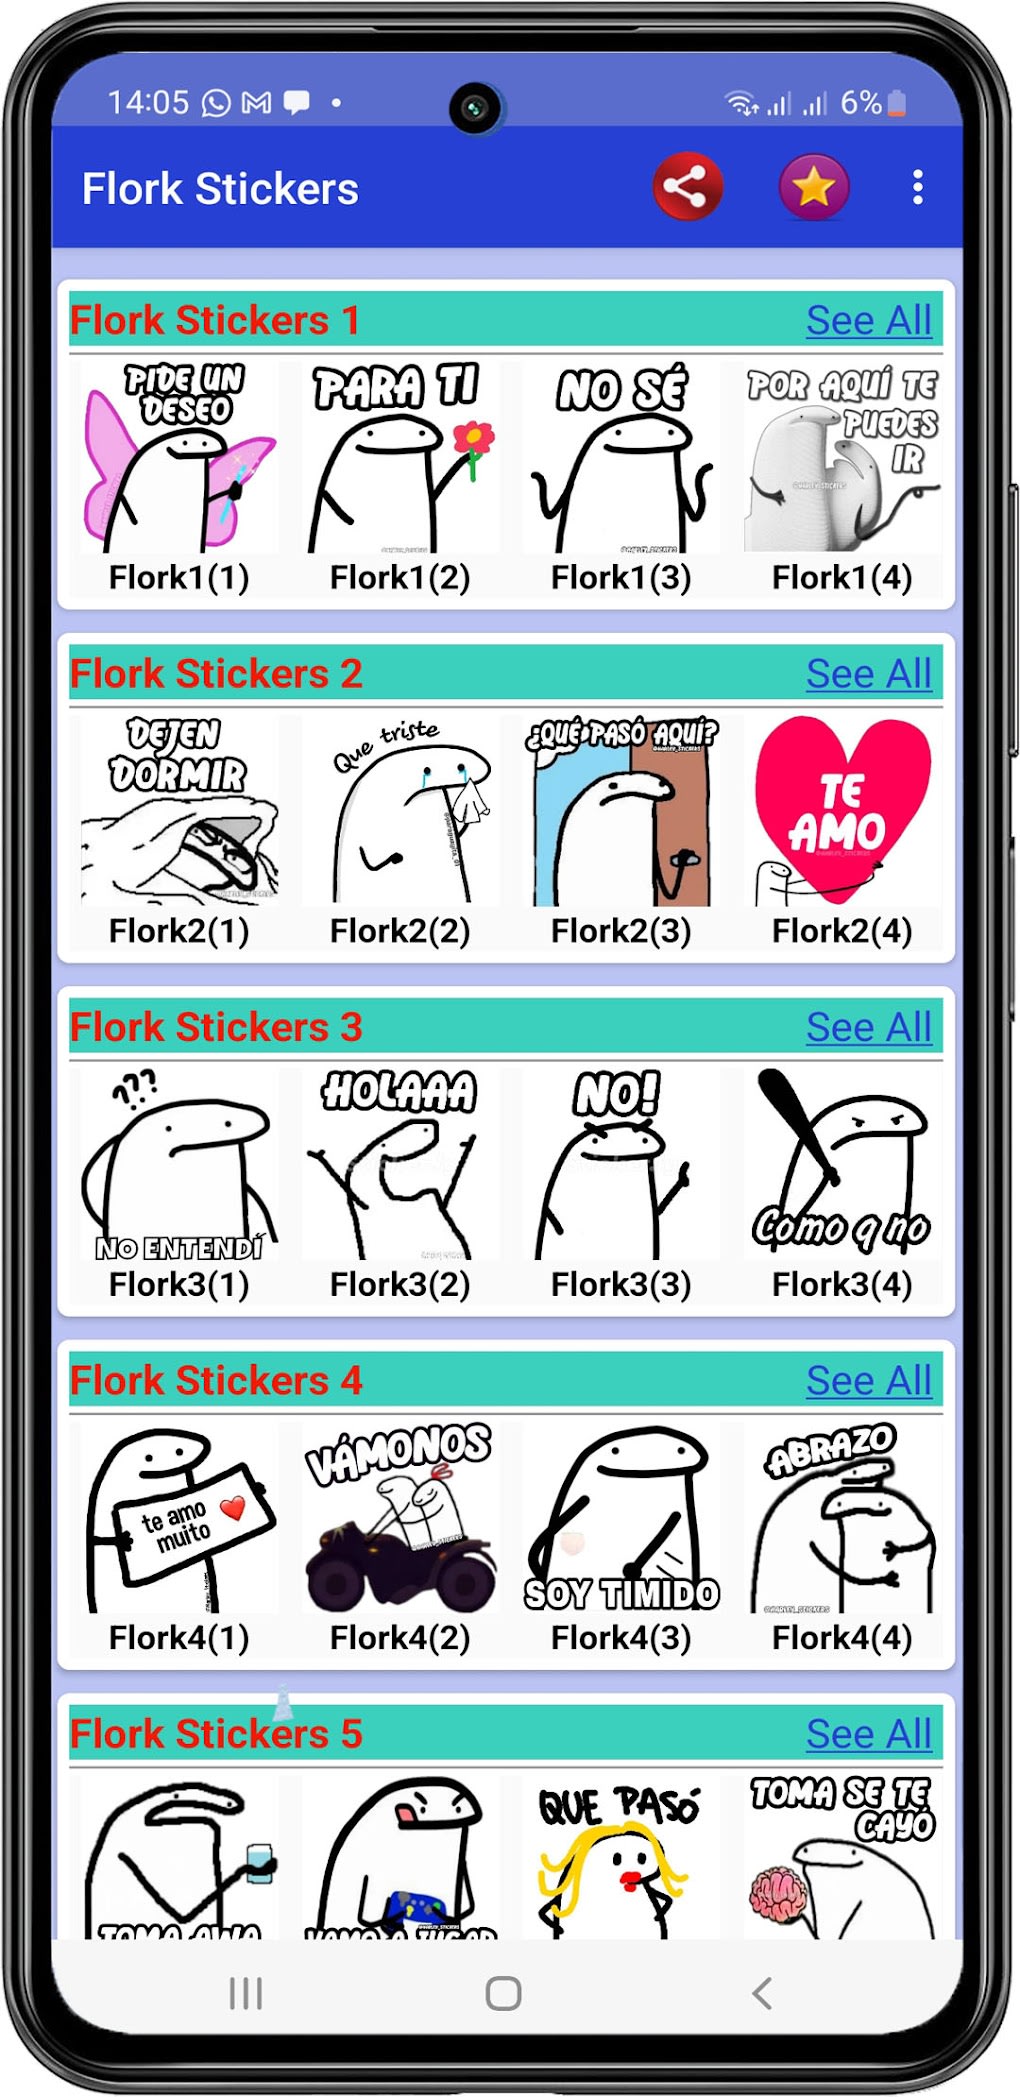 8 Pack of Flork meme | Sticker